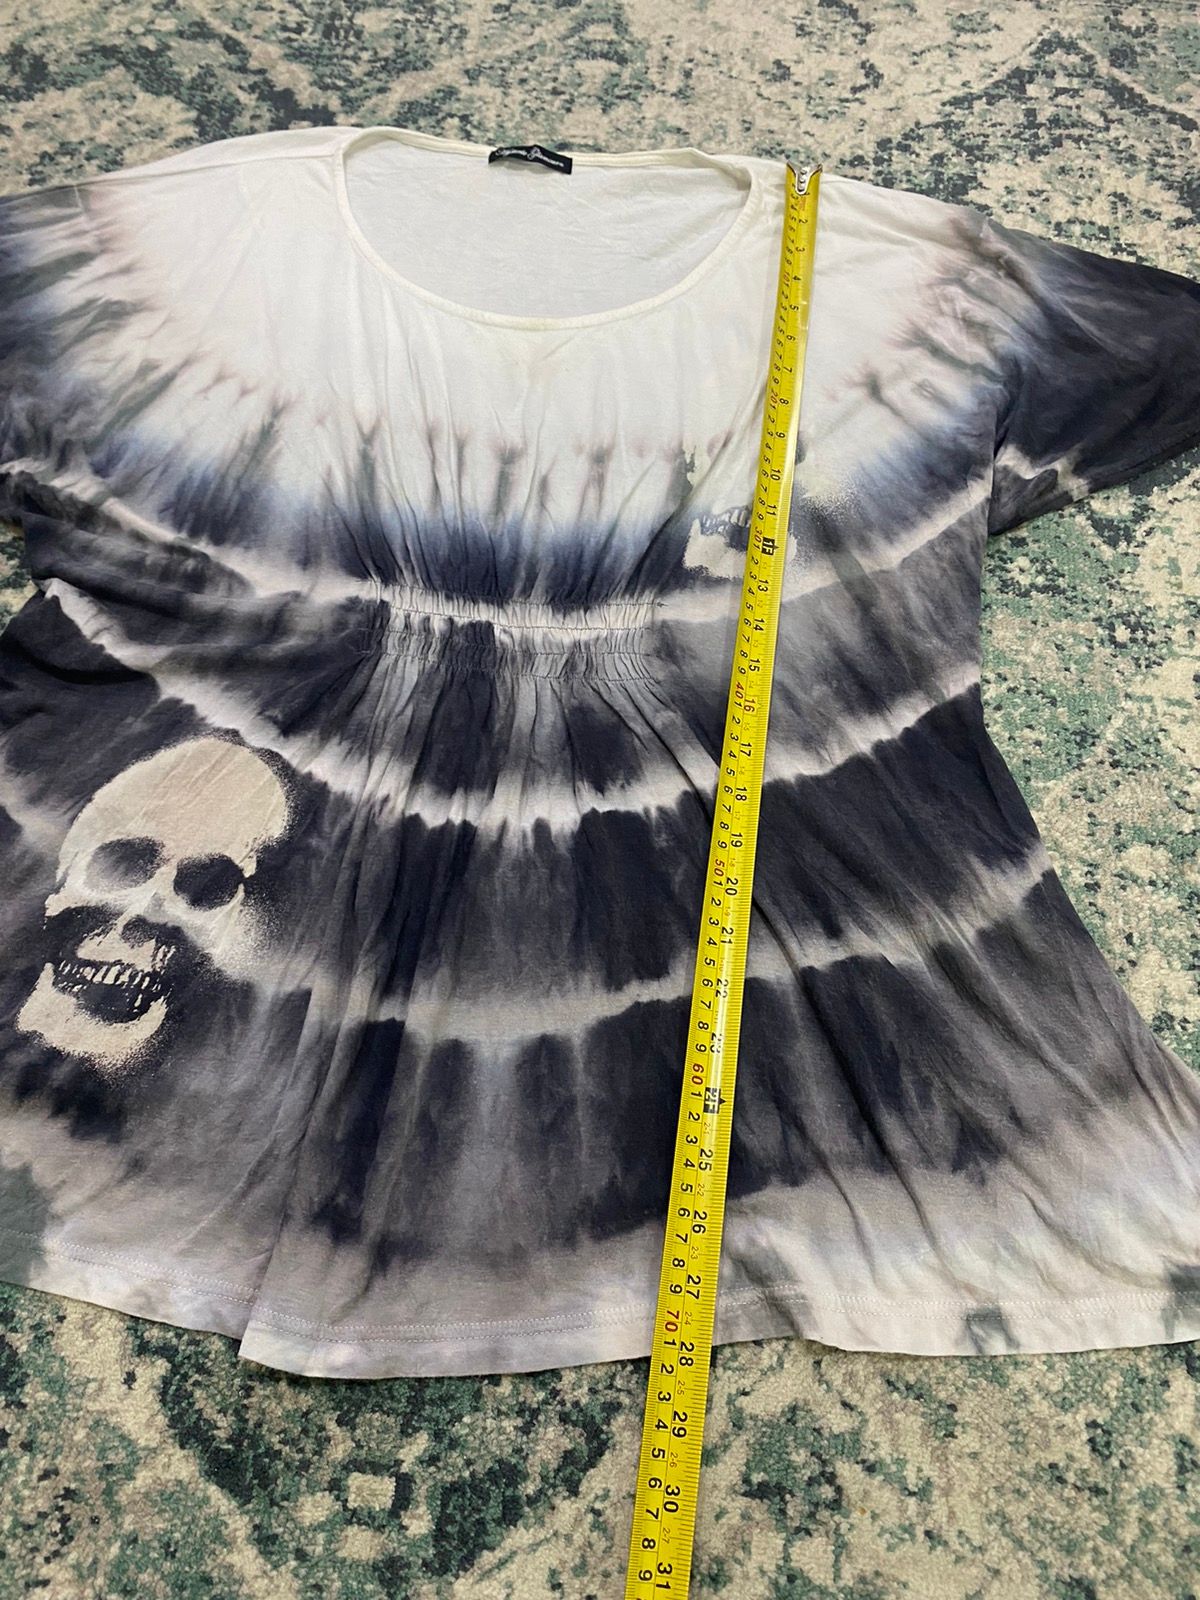 Hysteric Glamour Skull Tie Dye Sleeveless Blouse T-Shirt - 10